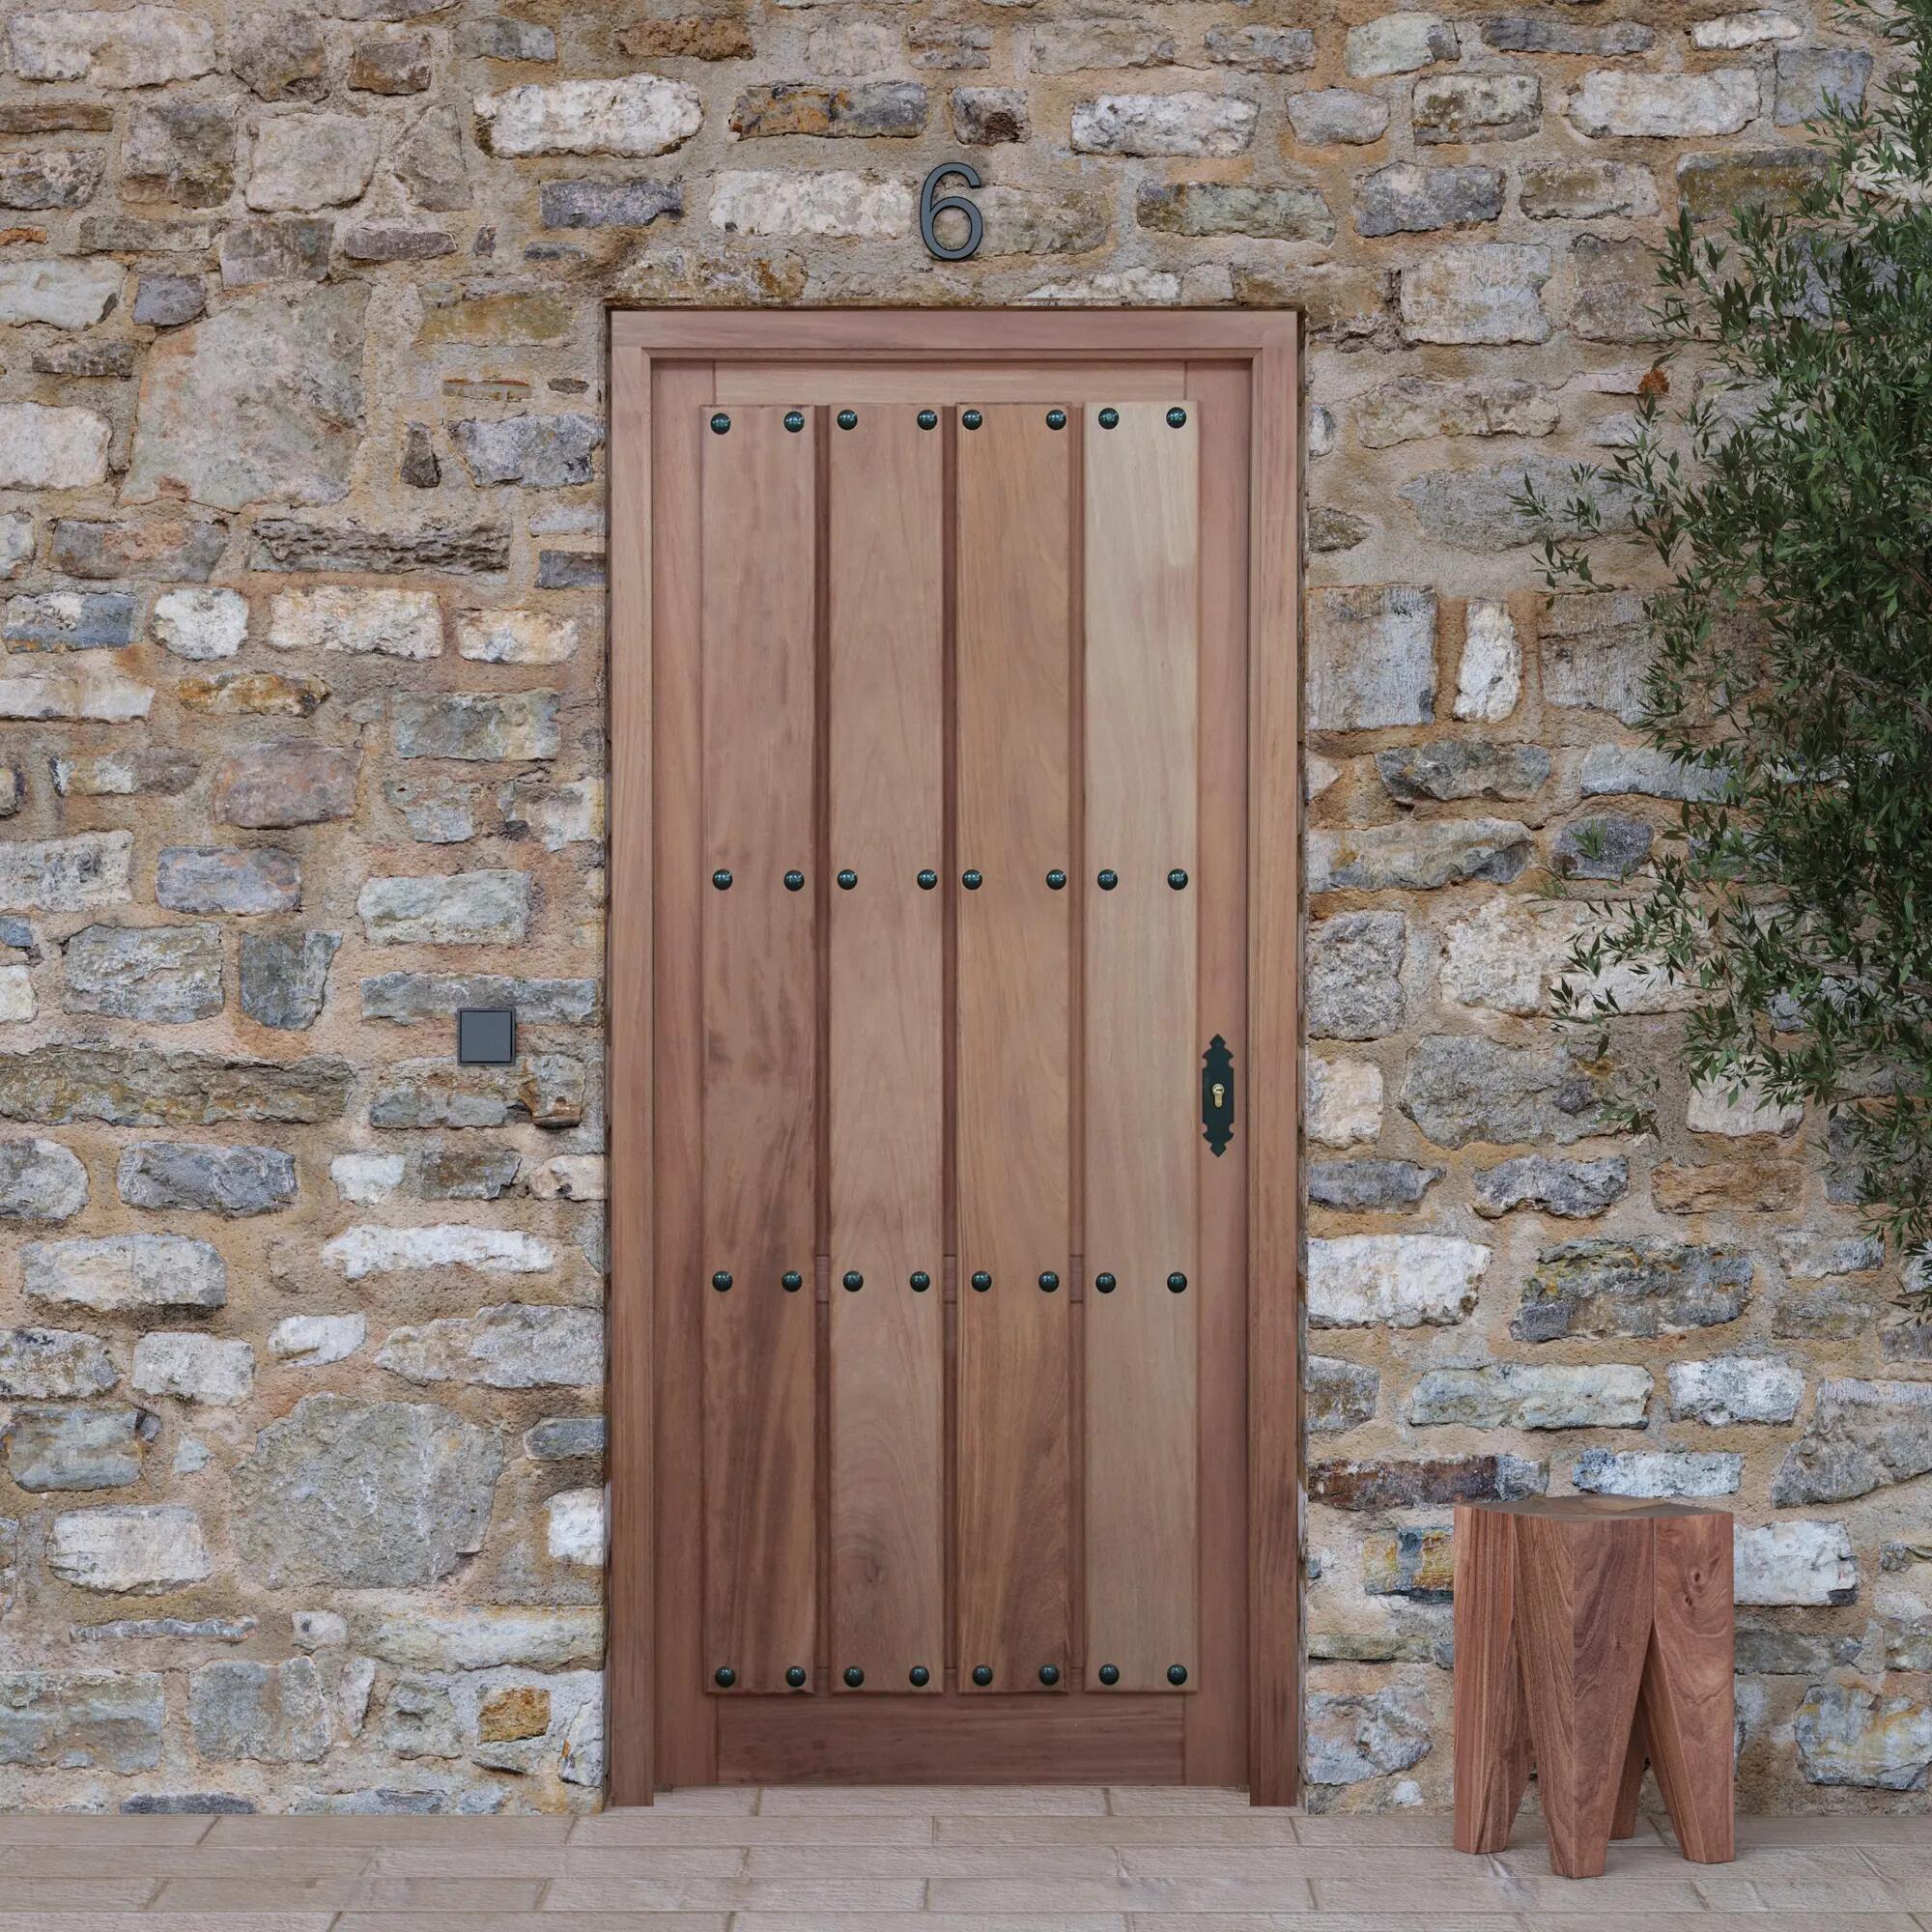 Puerta de madera de pino partida reja para barnizar derecha de 95x210 cm